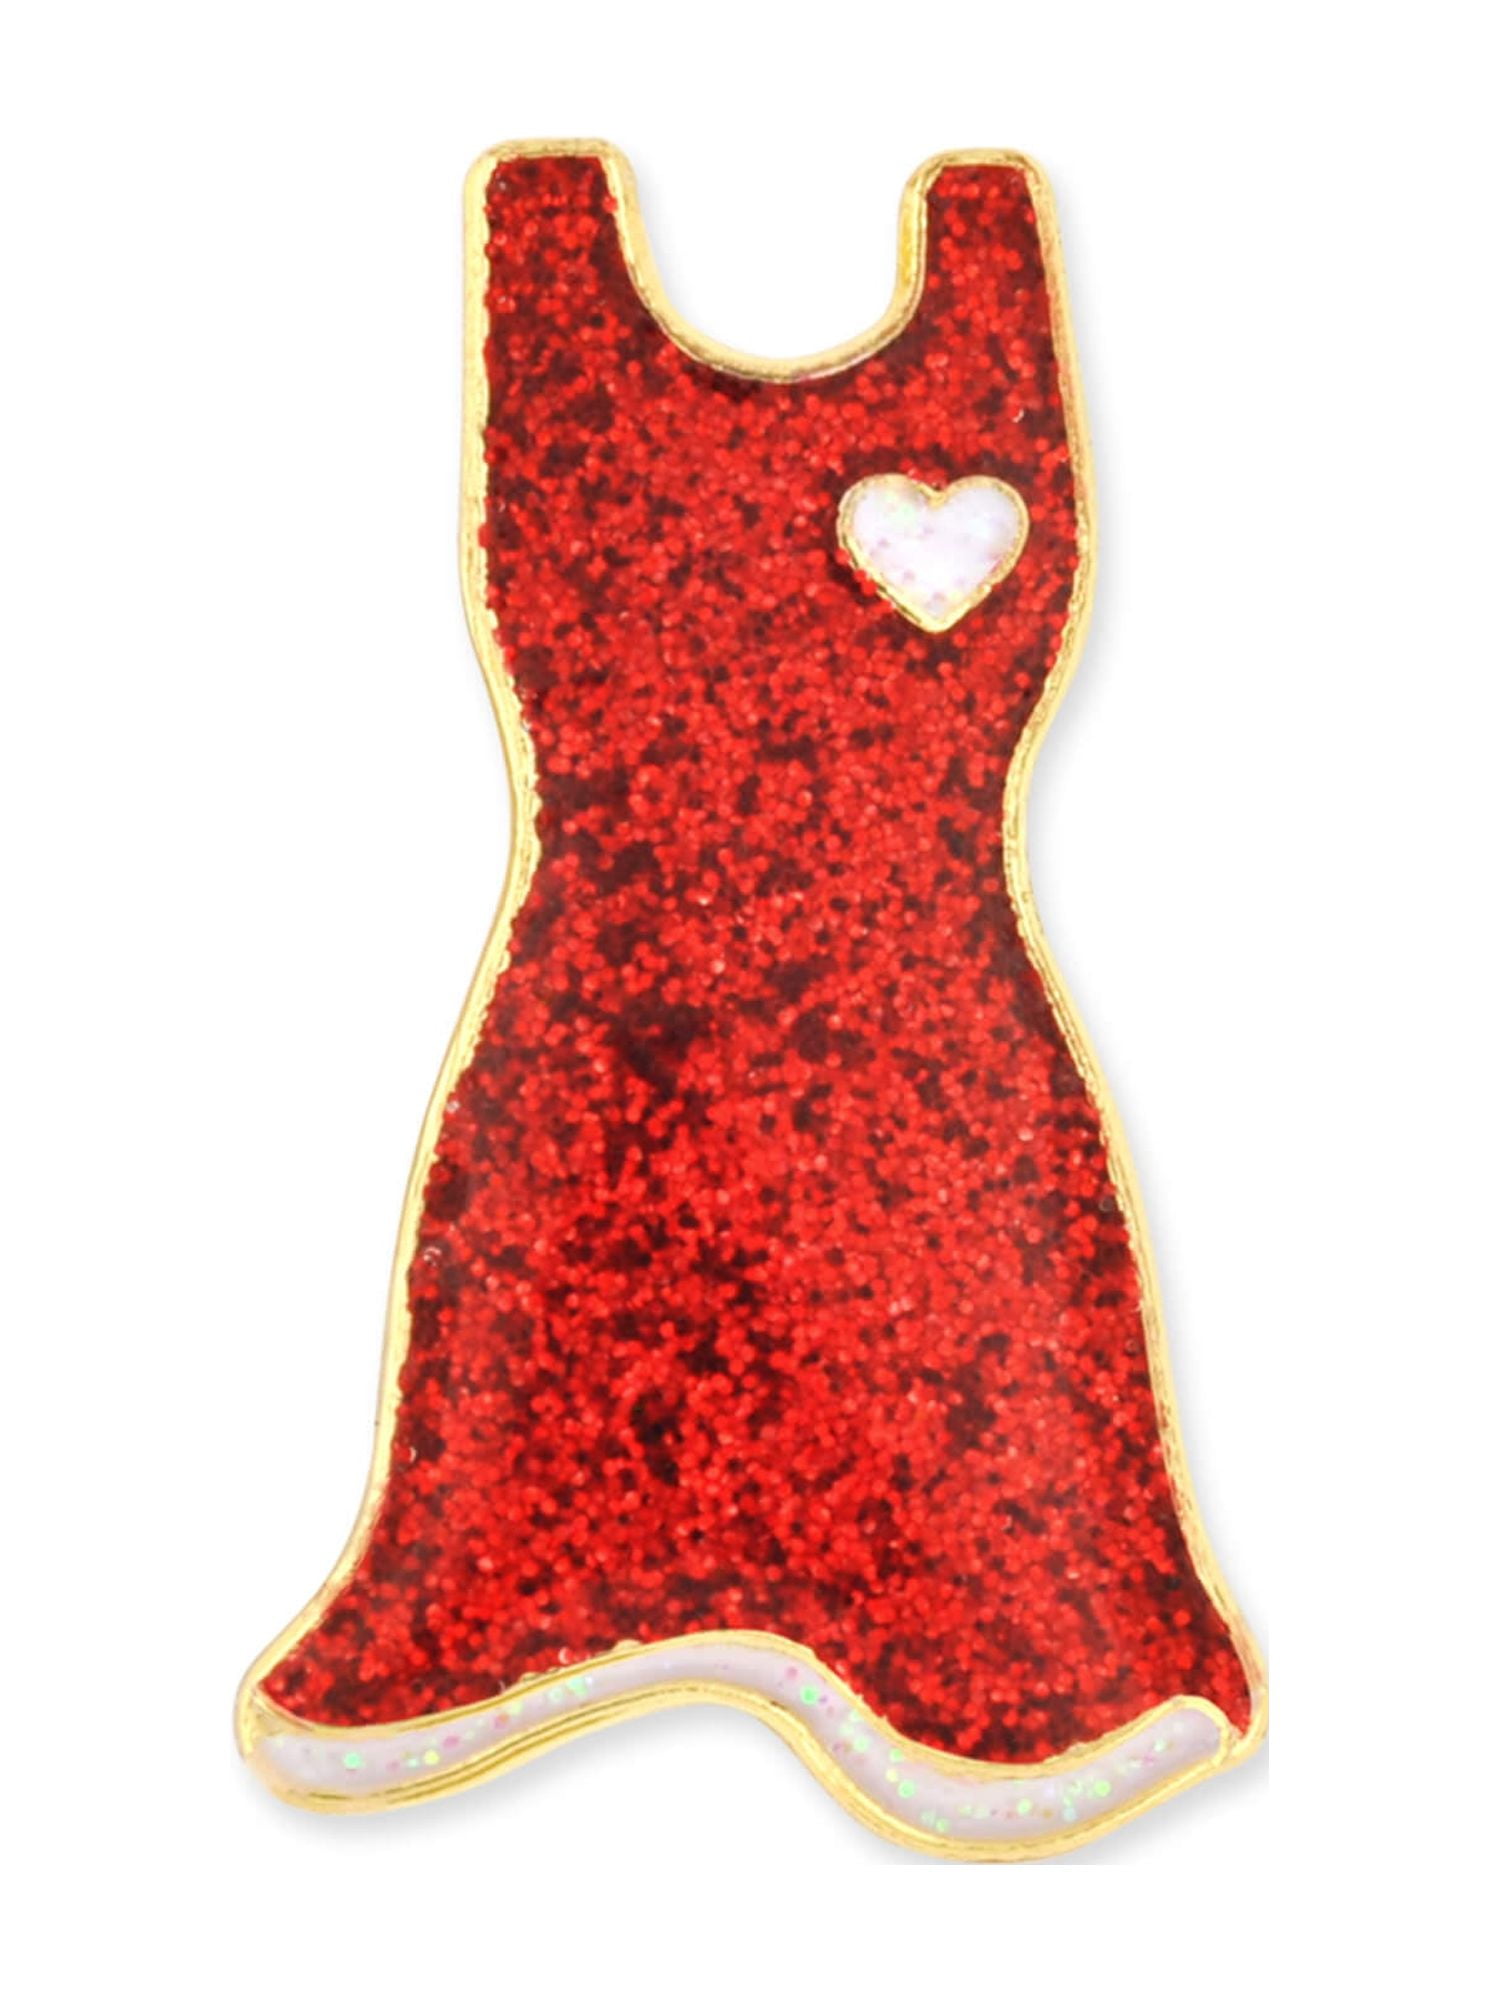 PinMart's Red Dress American Heart Month Enamel Lapel Pin